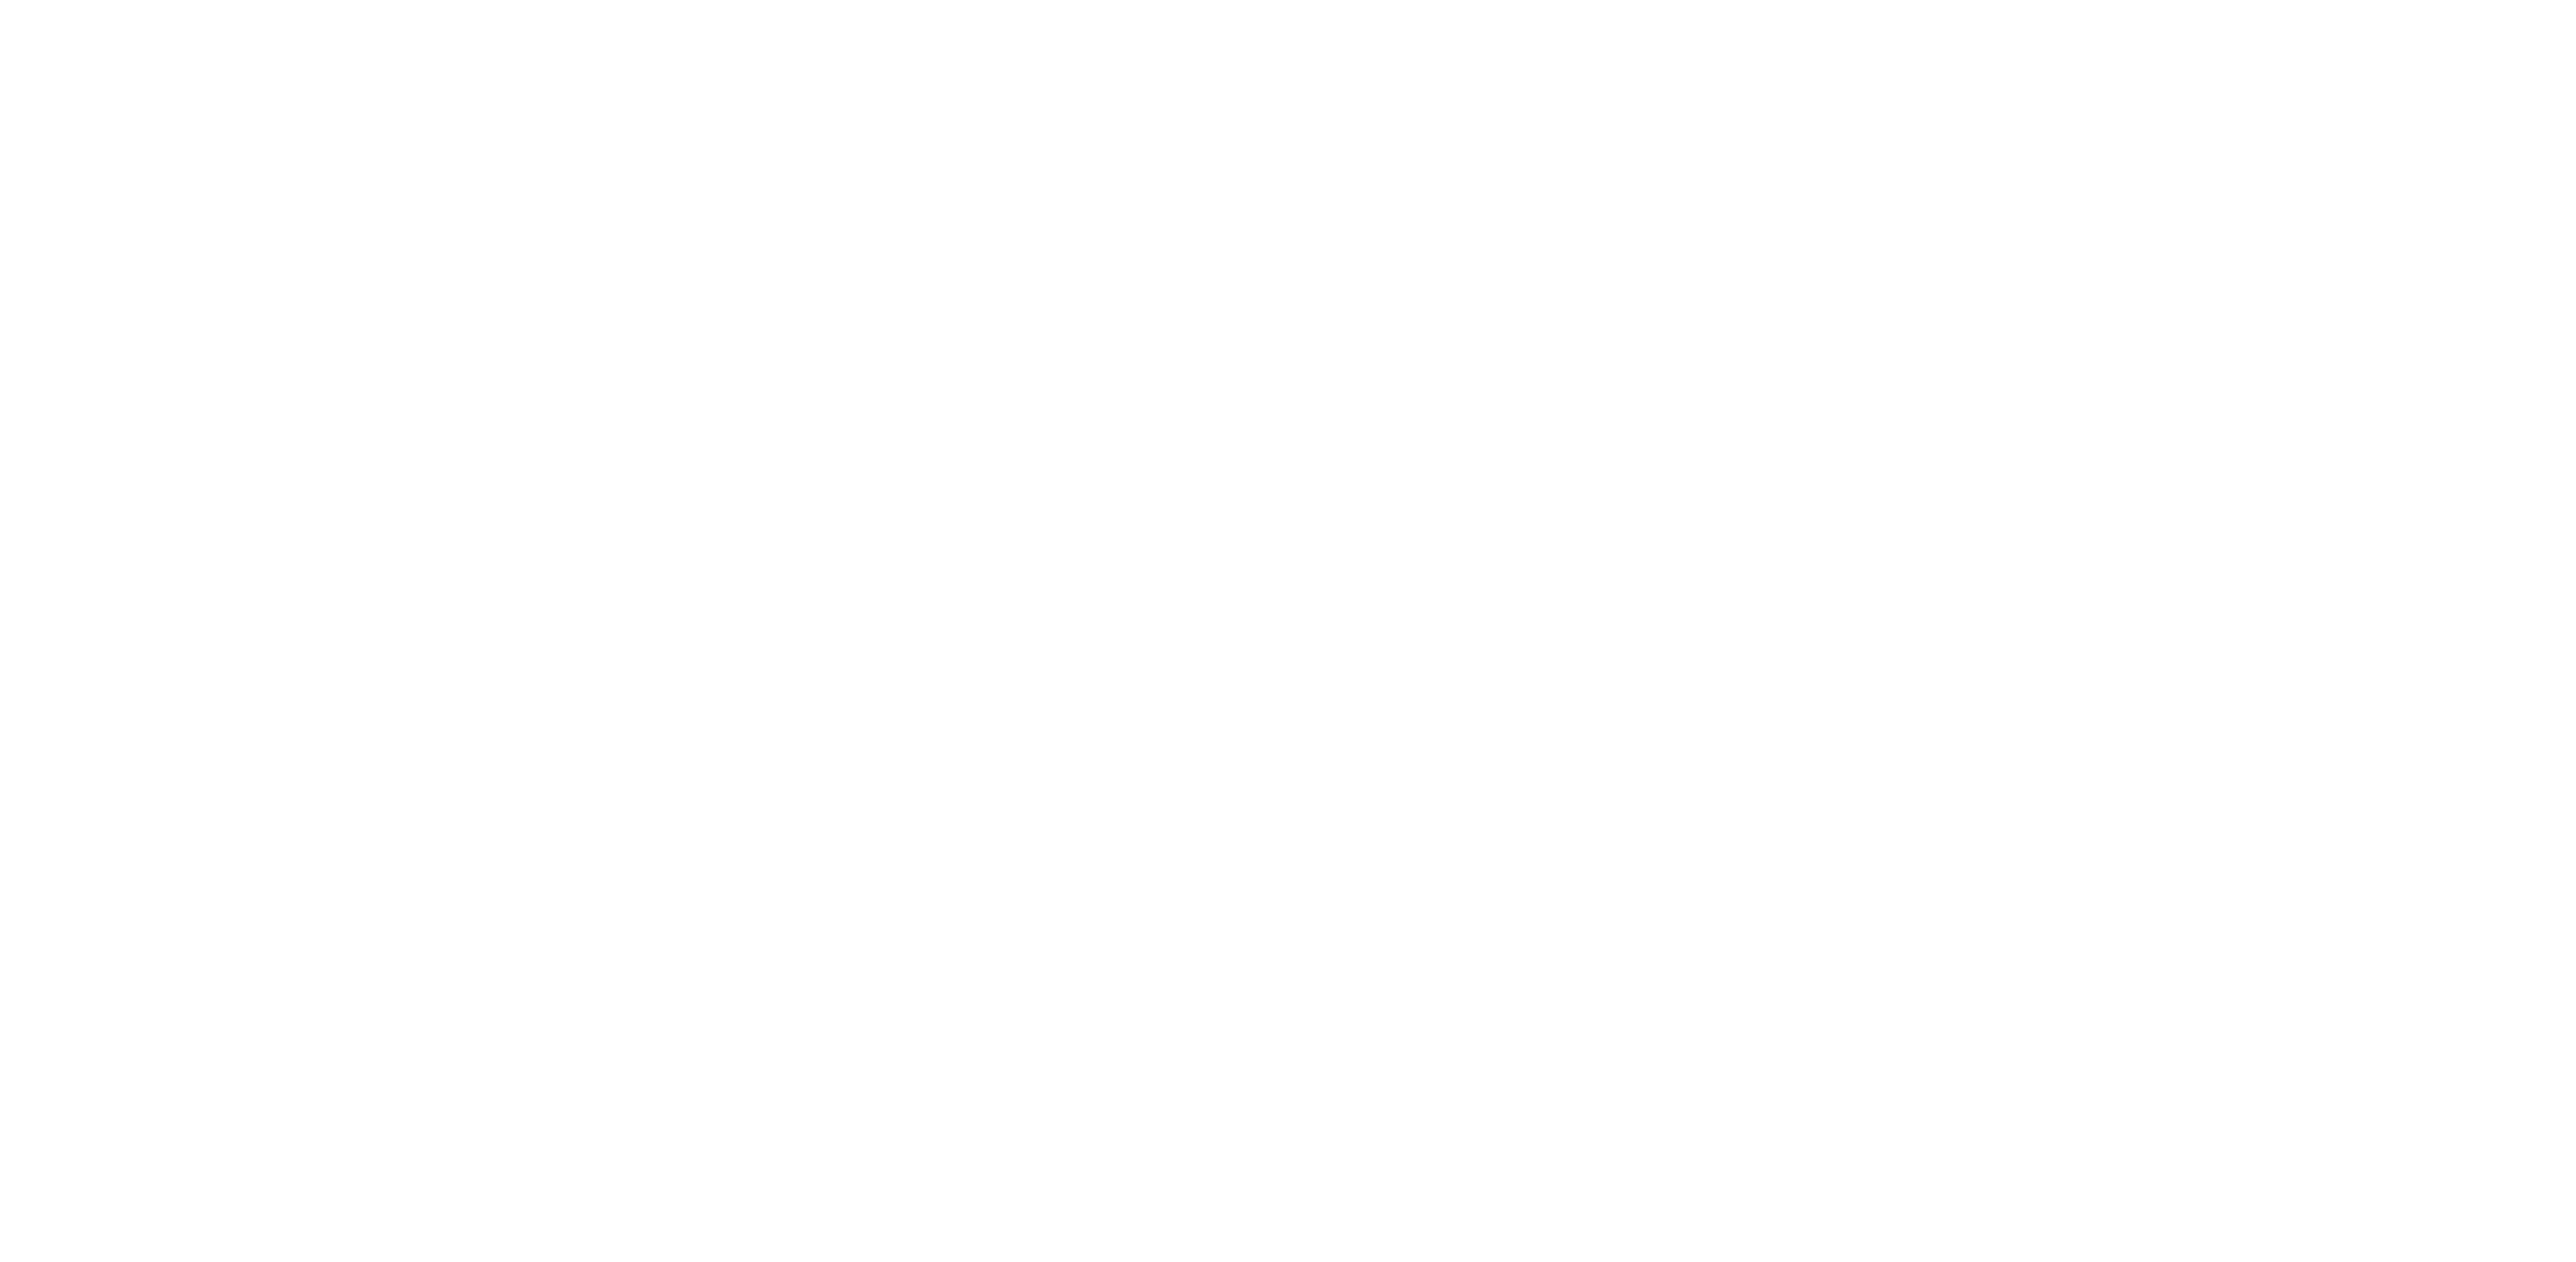 wolfoftablet logo white on black